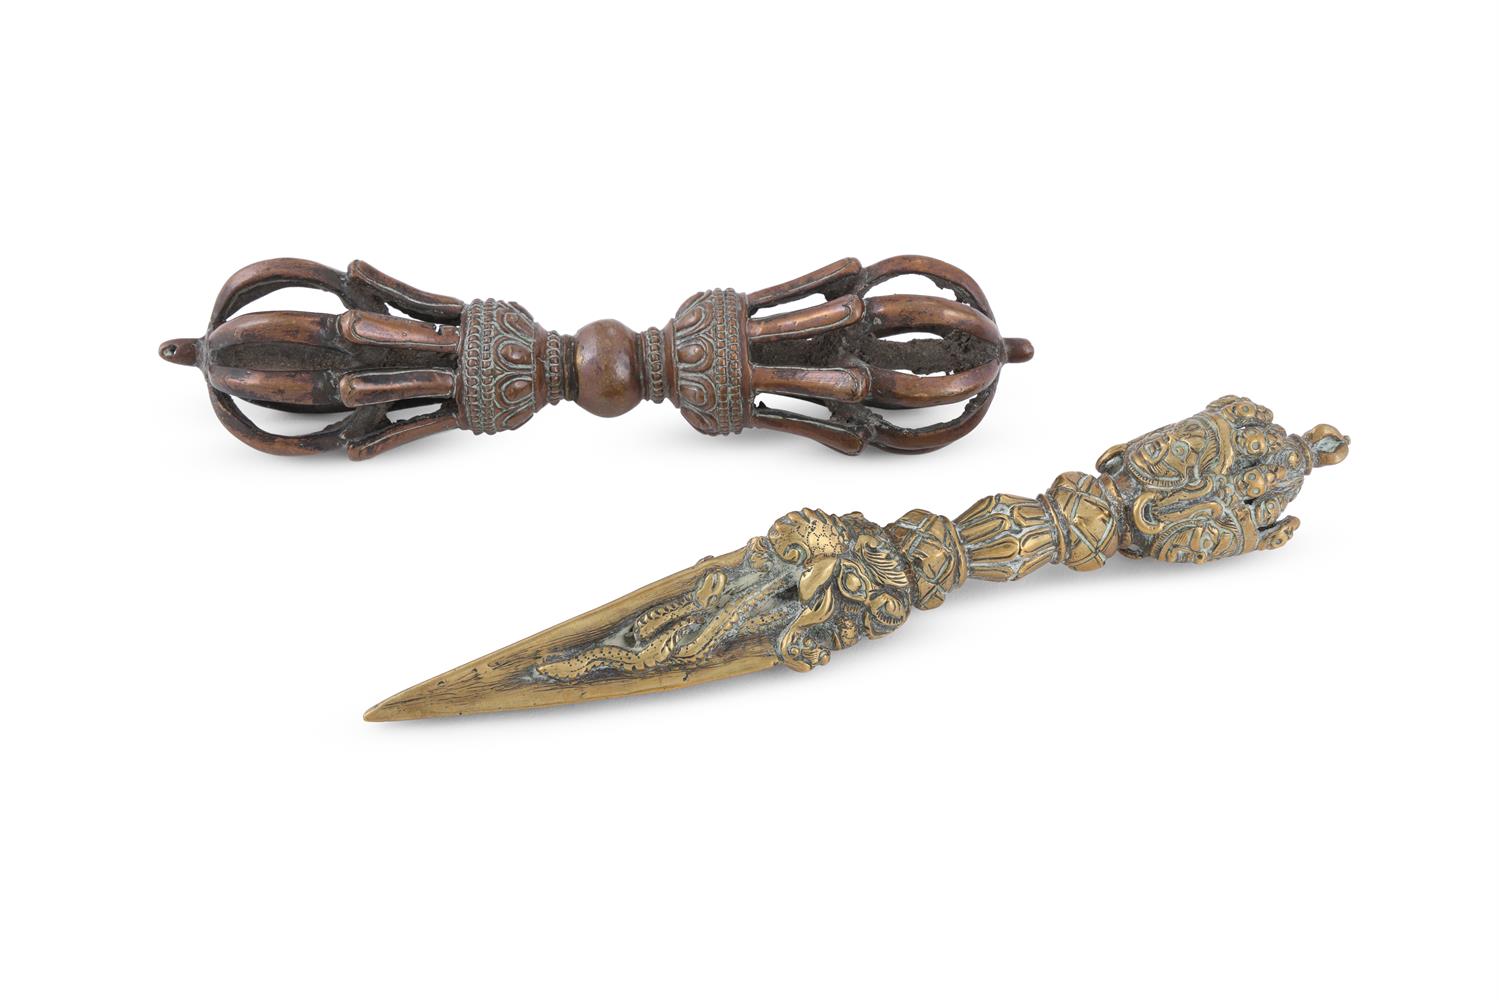 A Ritual Dagger (phurbu) and Thunderbolt (dorje)